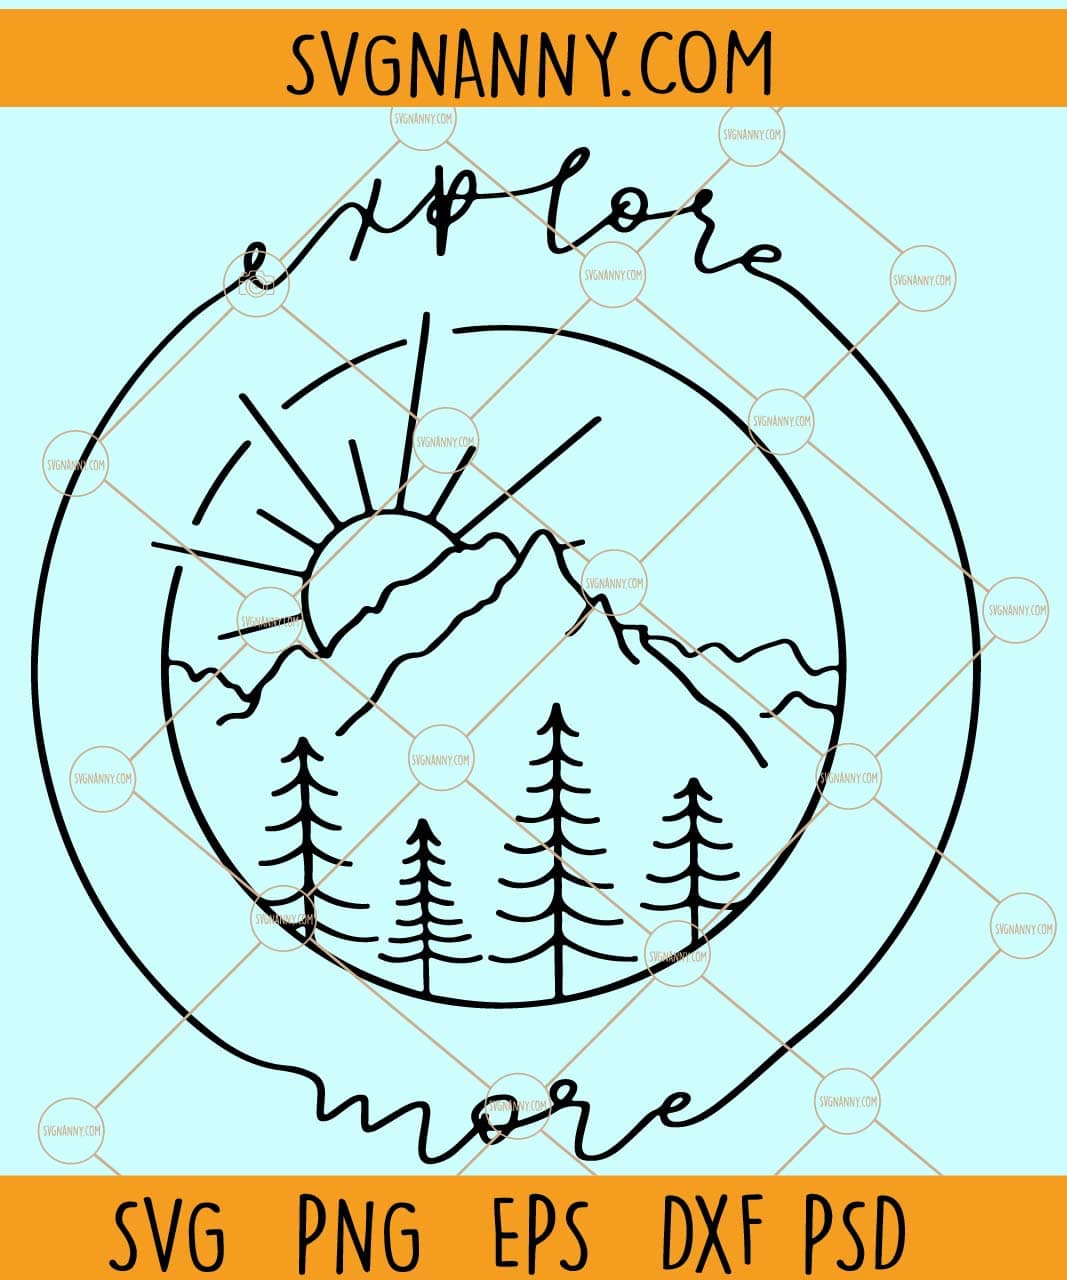 Explore More SVG  Hiking SVG File  Camping SVG  Outdoorsy svg  Trees svg  Mountains svg